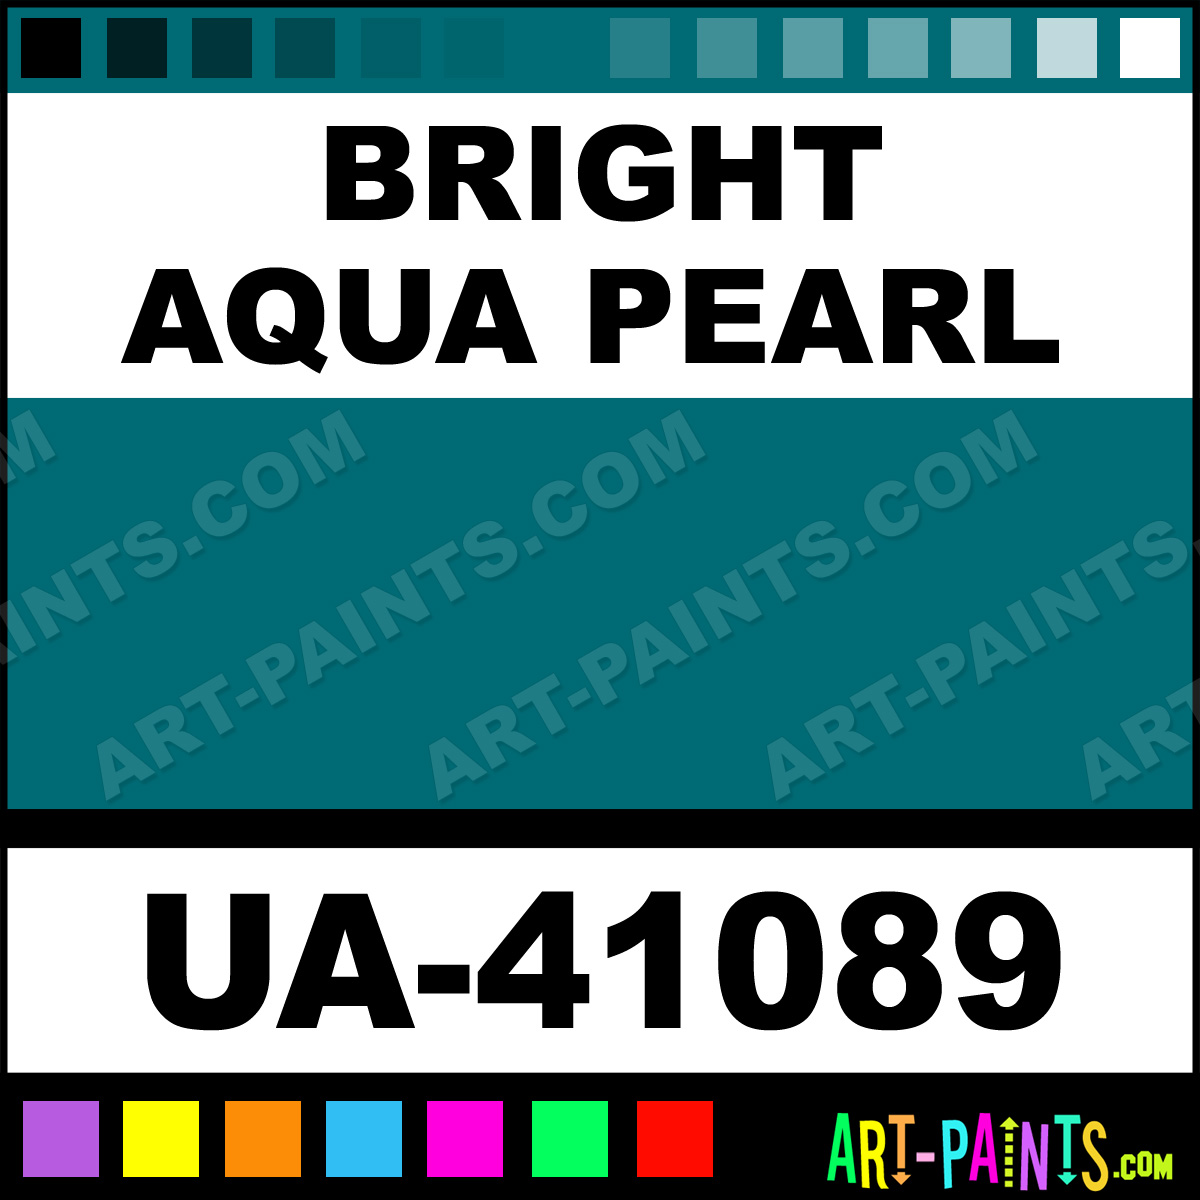 Bright-Aqua-Pearl-lg.jpg